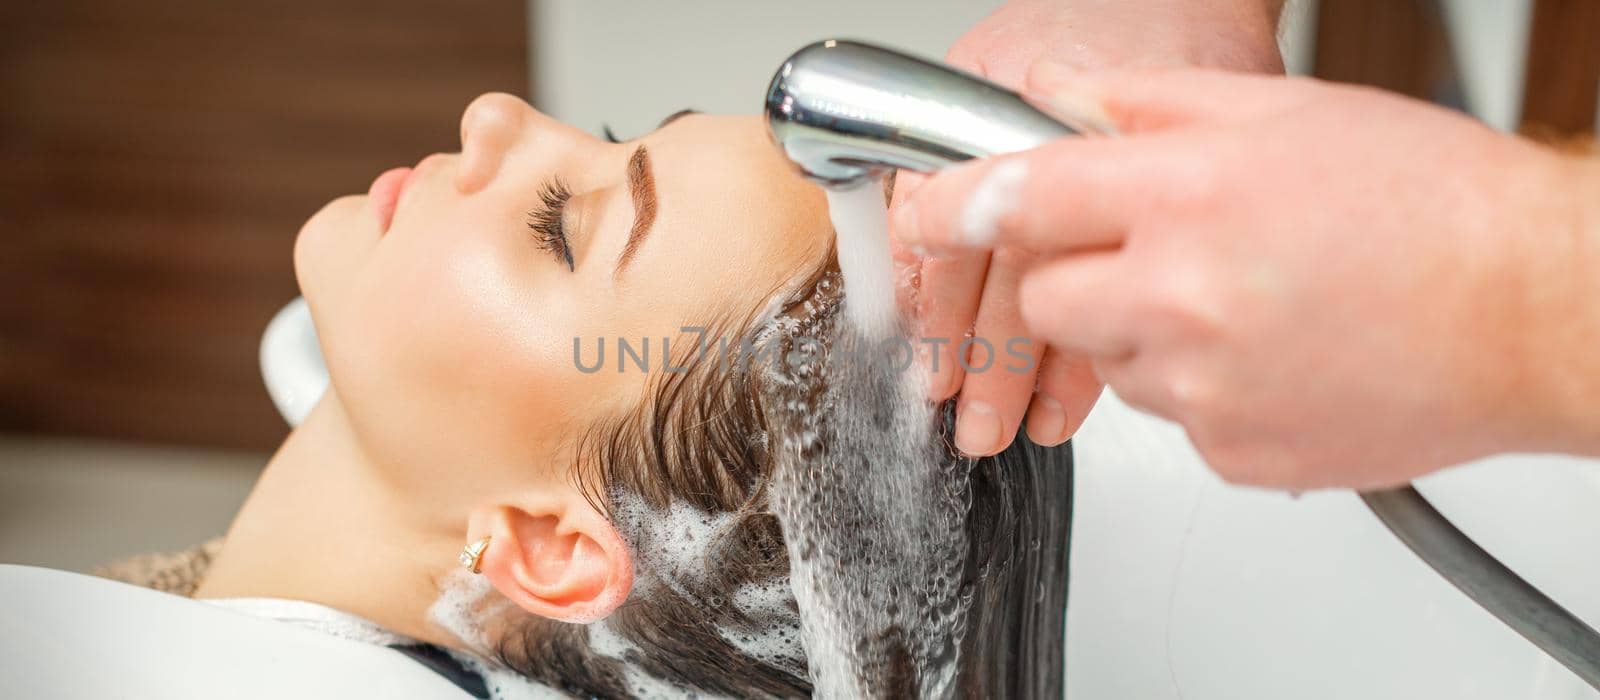 Hands of hairdresser washing hair of woman by okskukuruza